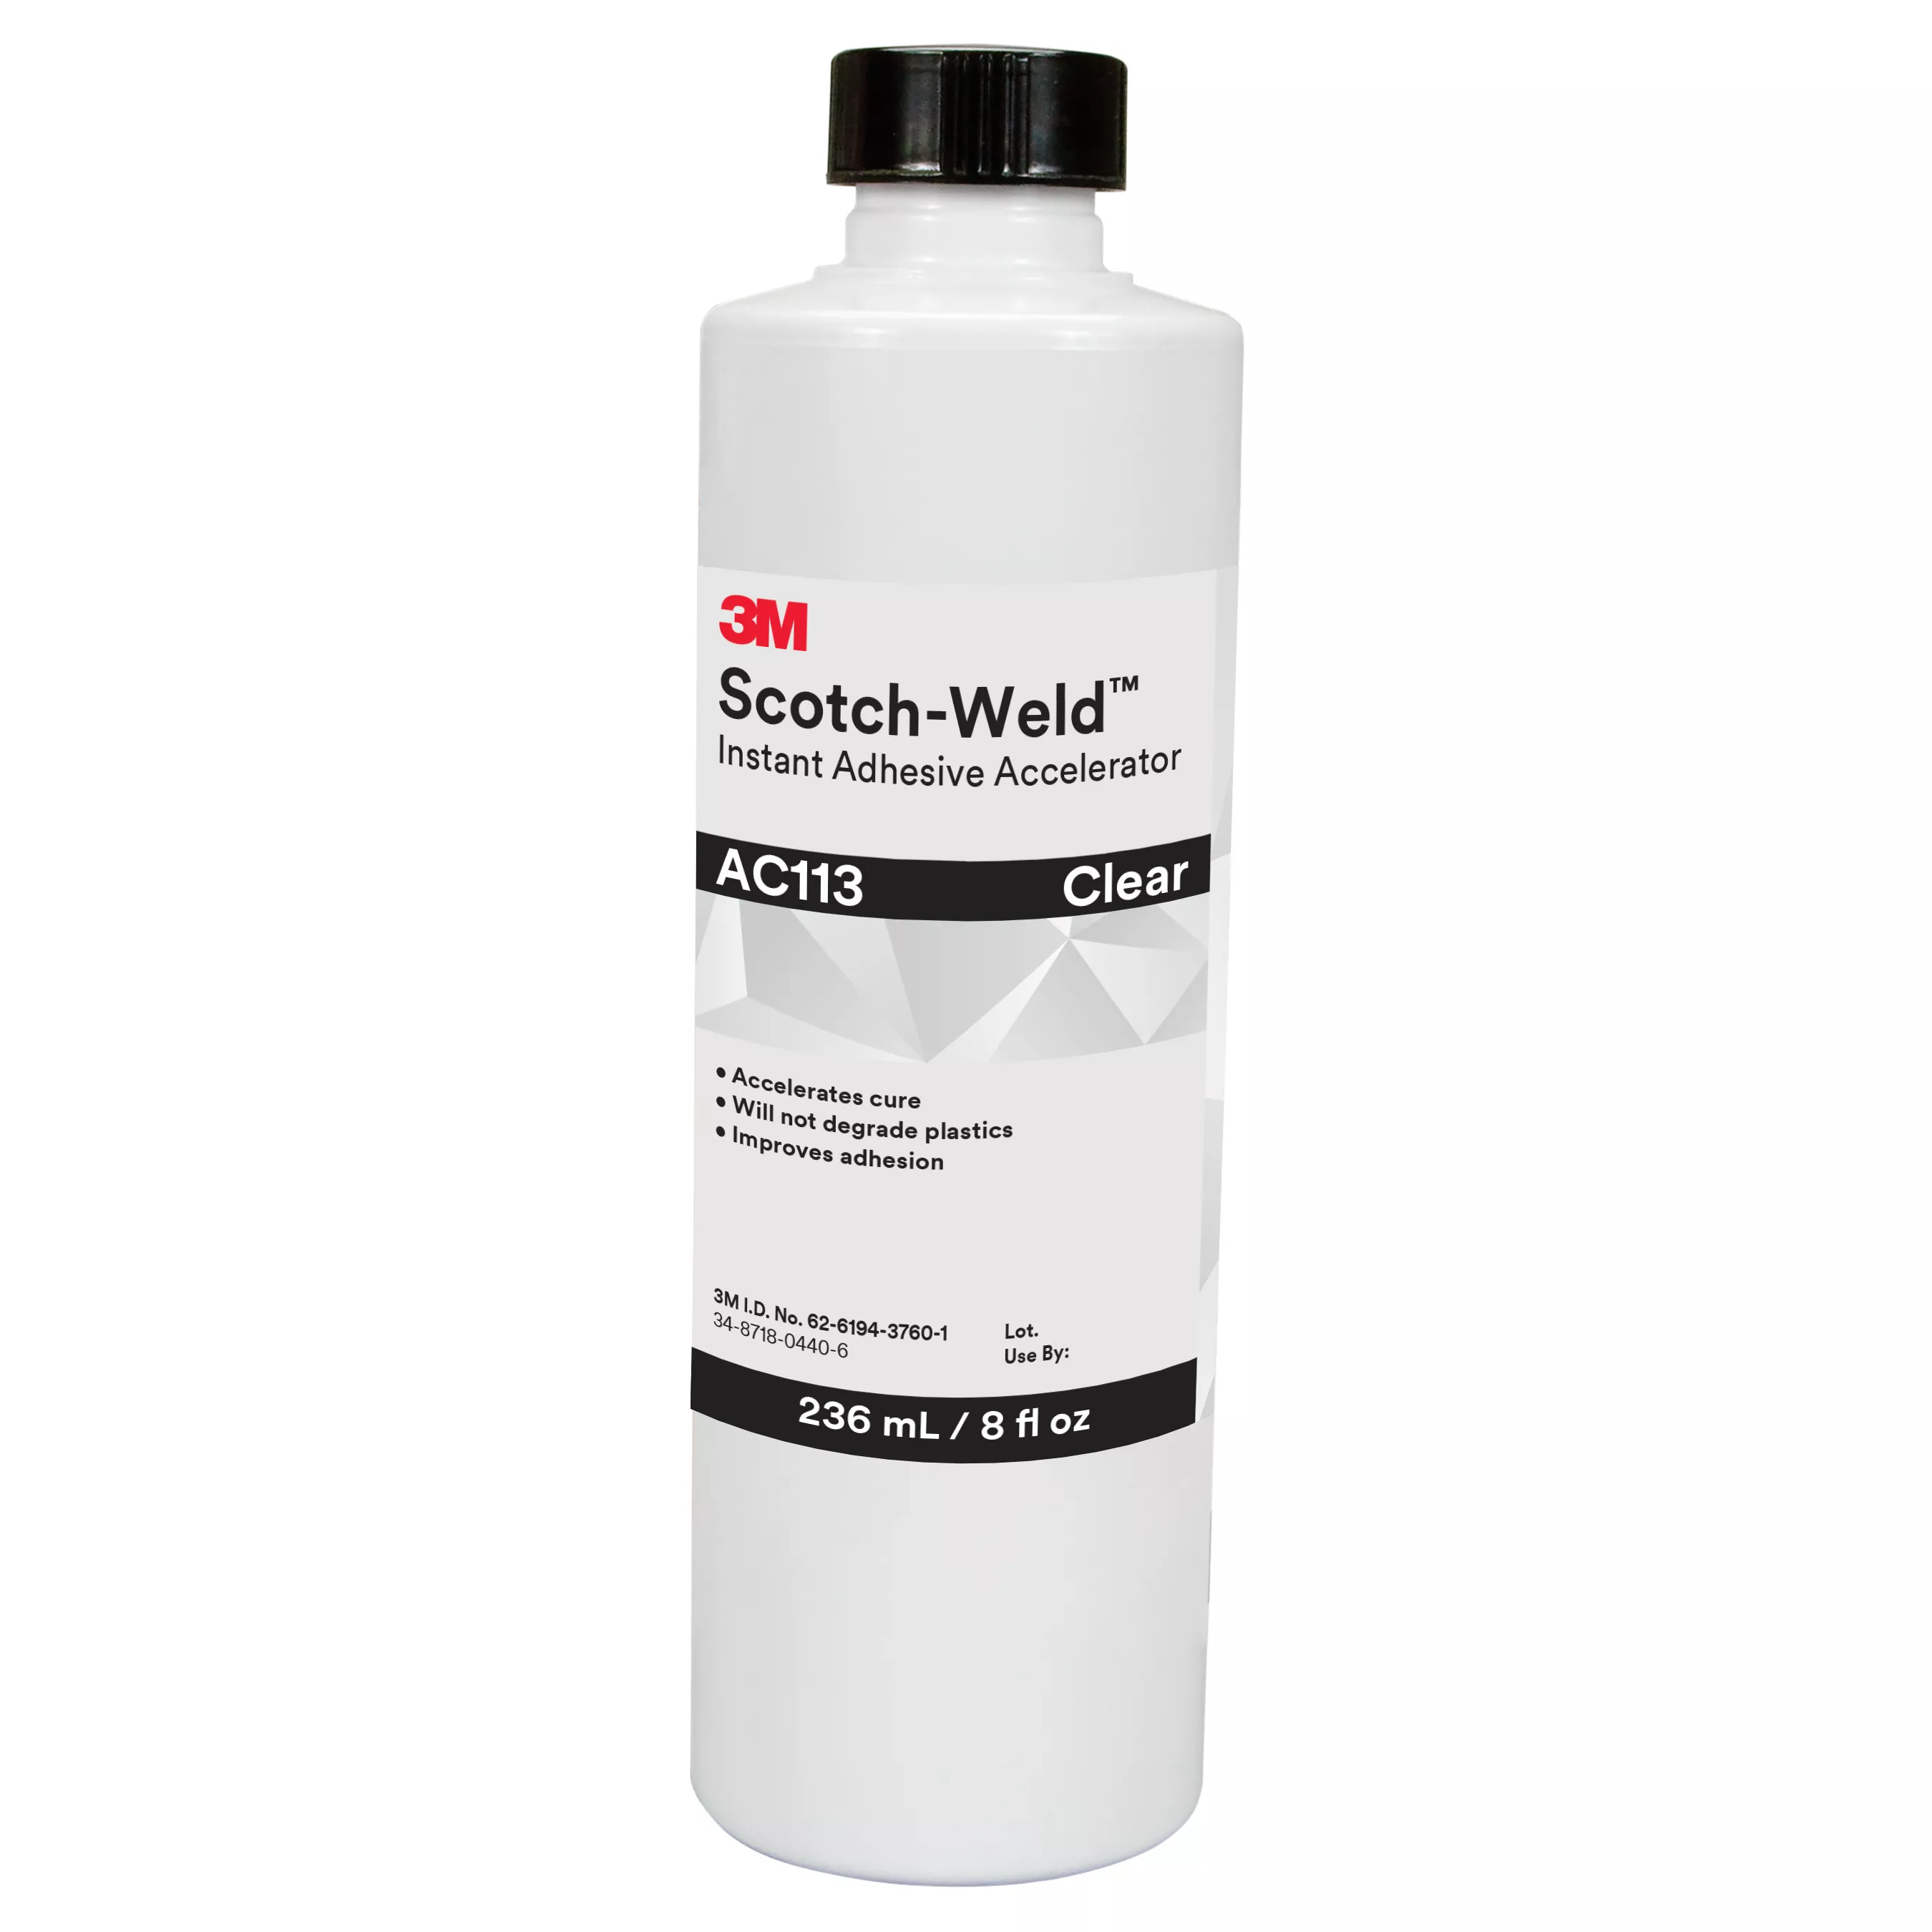 3M™ Scotch-Weld™ General Purpose Instant Adhesive Accelerator AC113,
Clear/Light Amber, 8 fl oz, 4 Bottles/Case